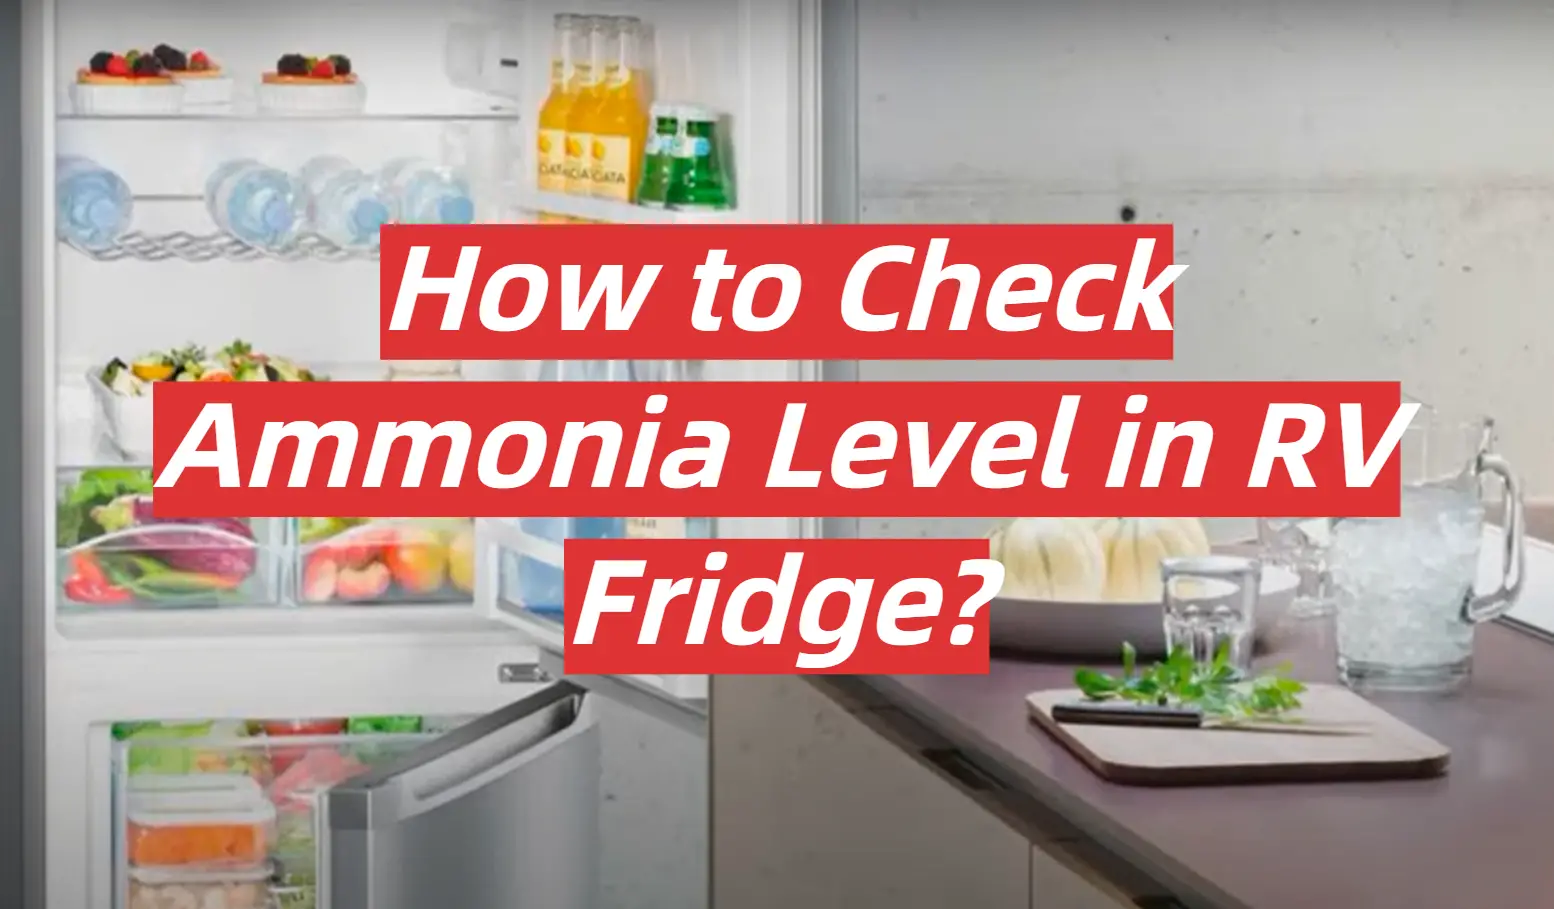 How to Check Ammonia Level in RV Fridge?